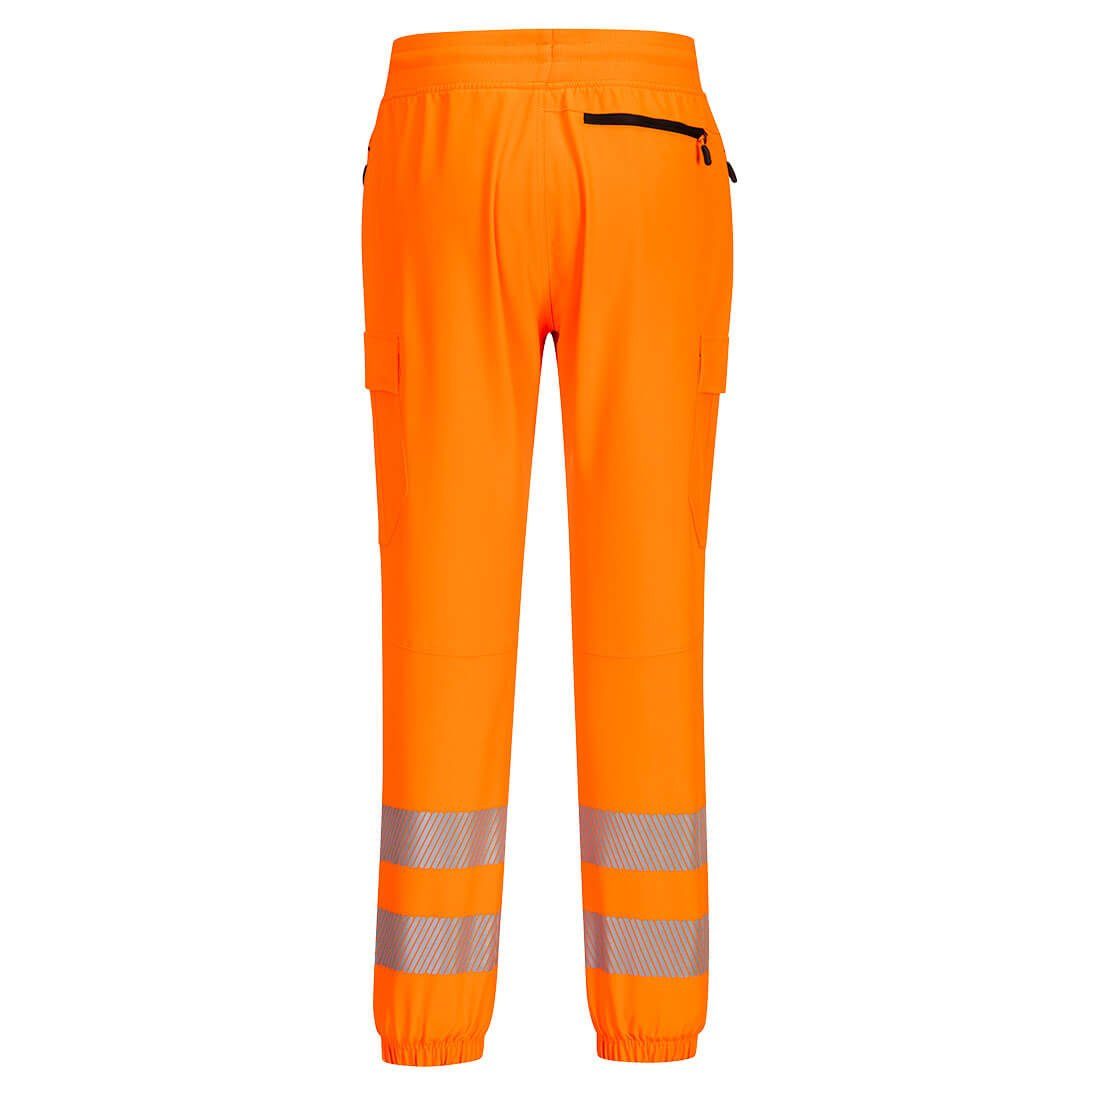 2 KX3 Arbeitsbundhose Orange/Schwarz Arbeitsbundhose Flexi-Jogger Portwest Warnschutz-Klasse